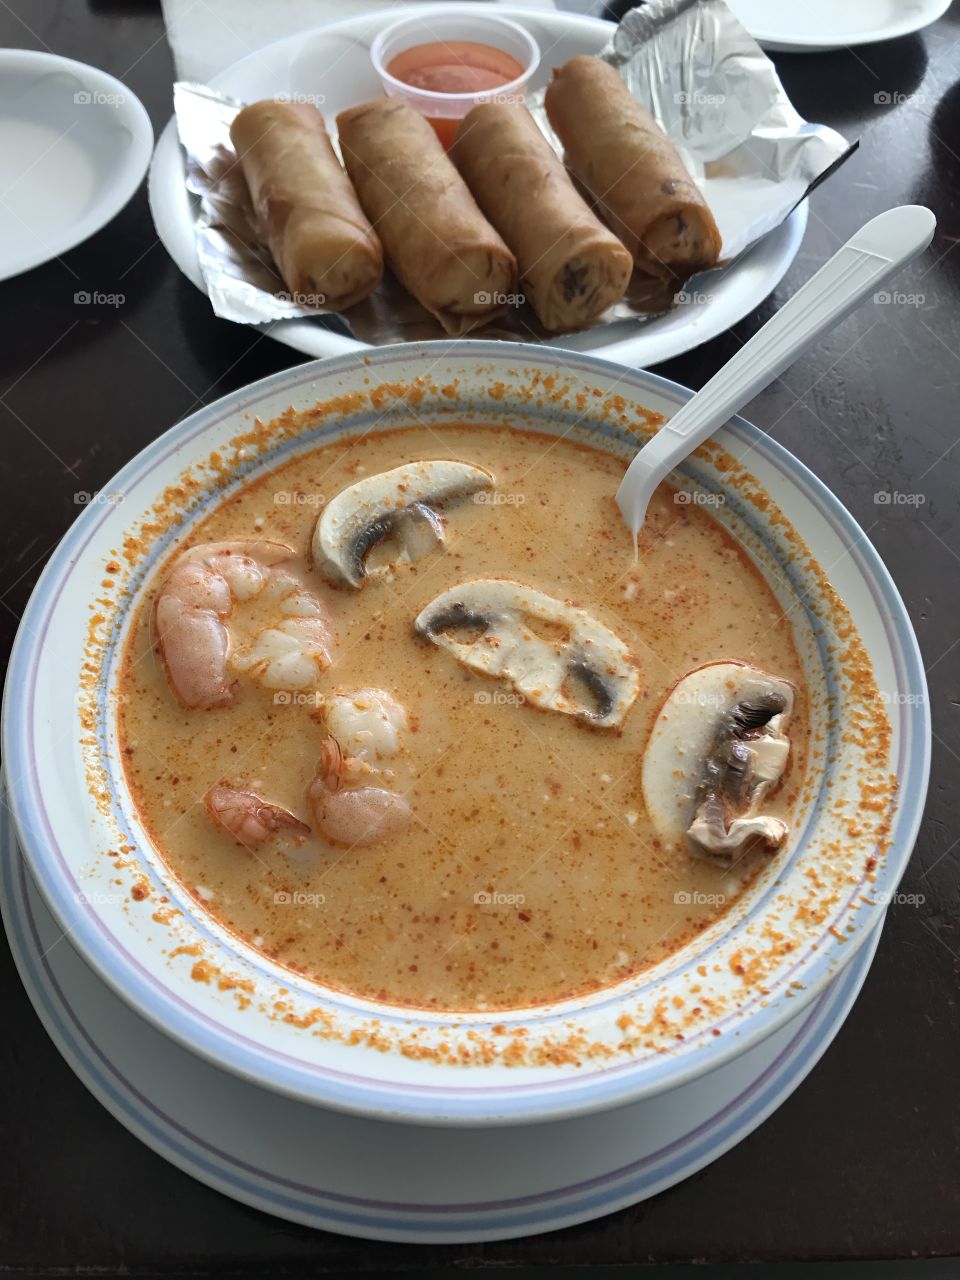 Serious Tom Yam Kung soup